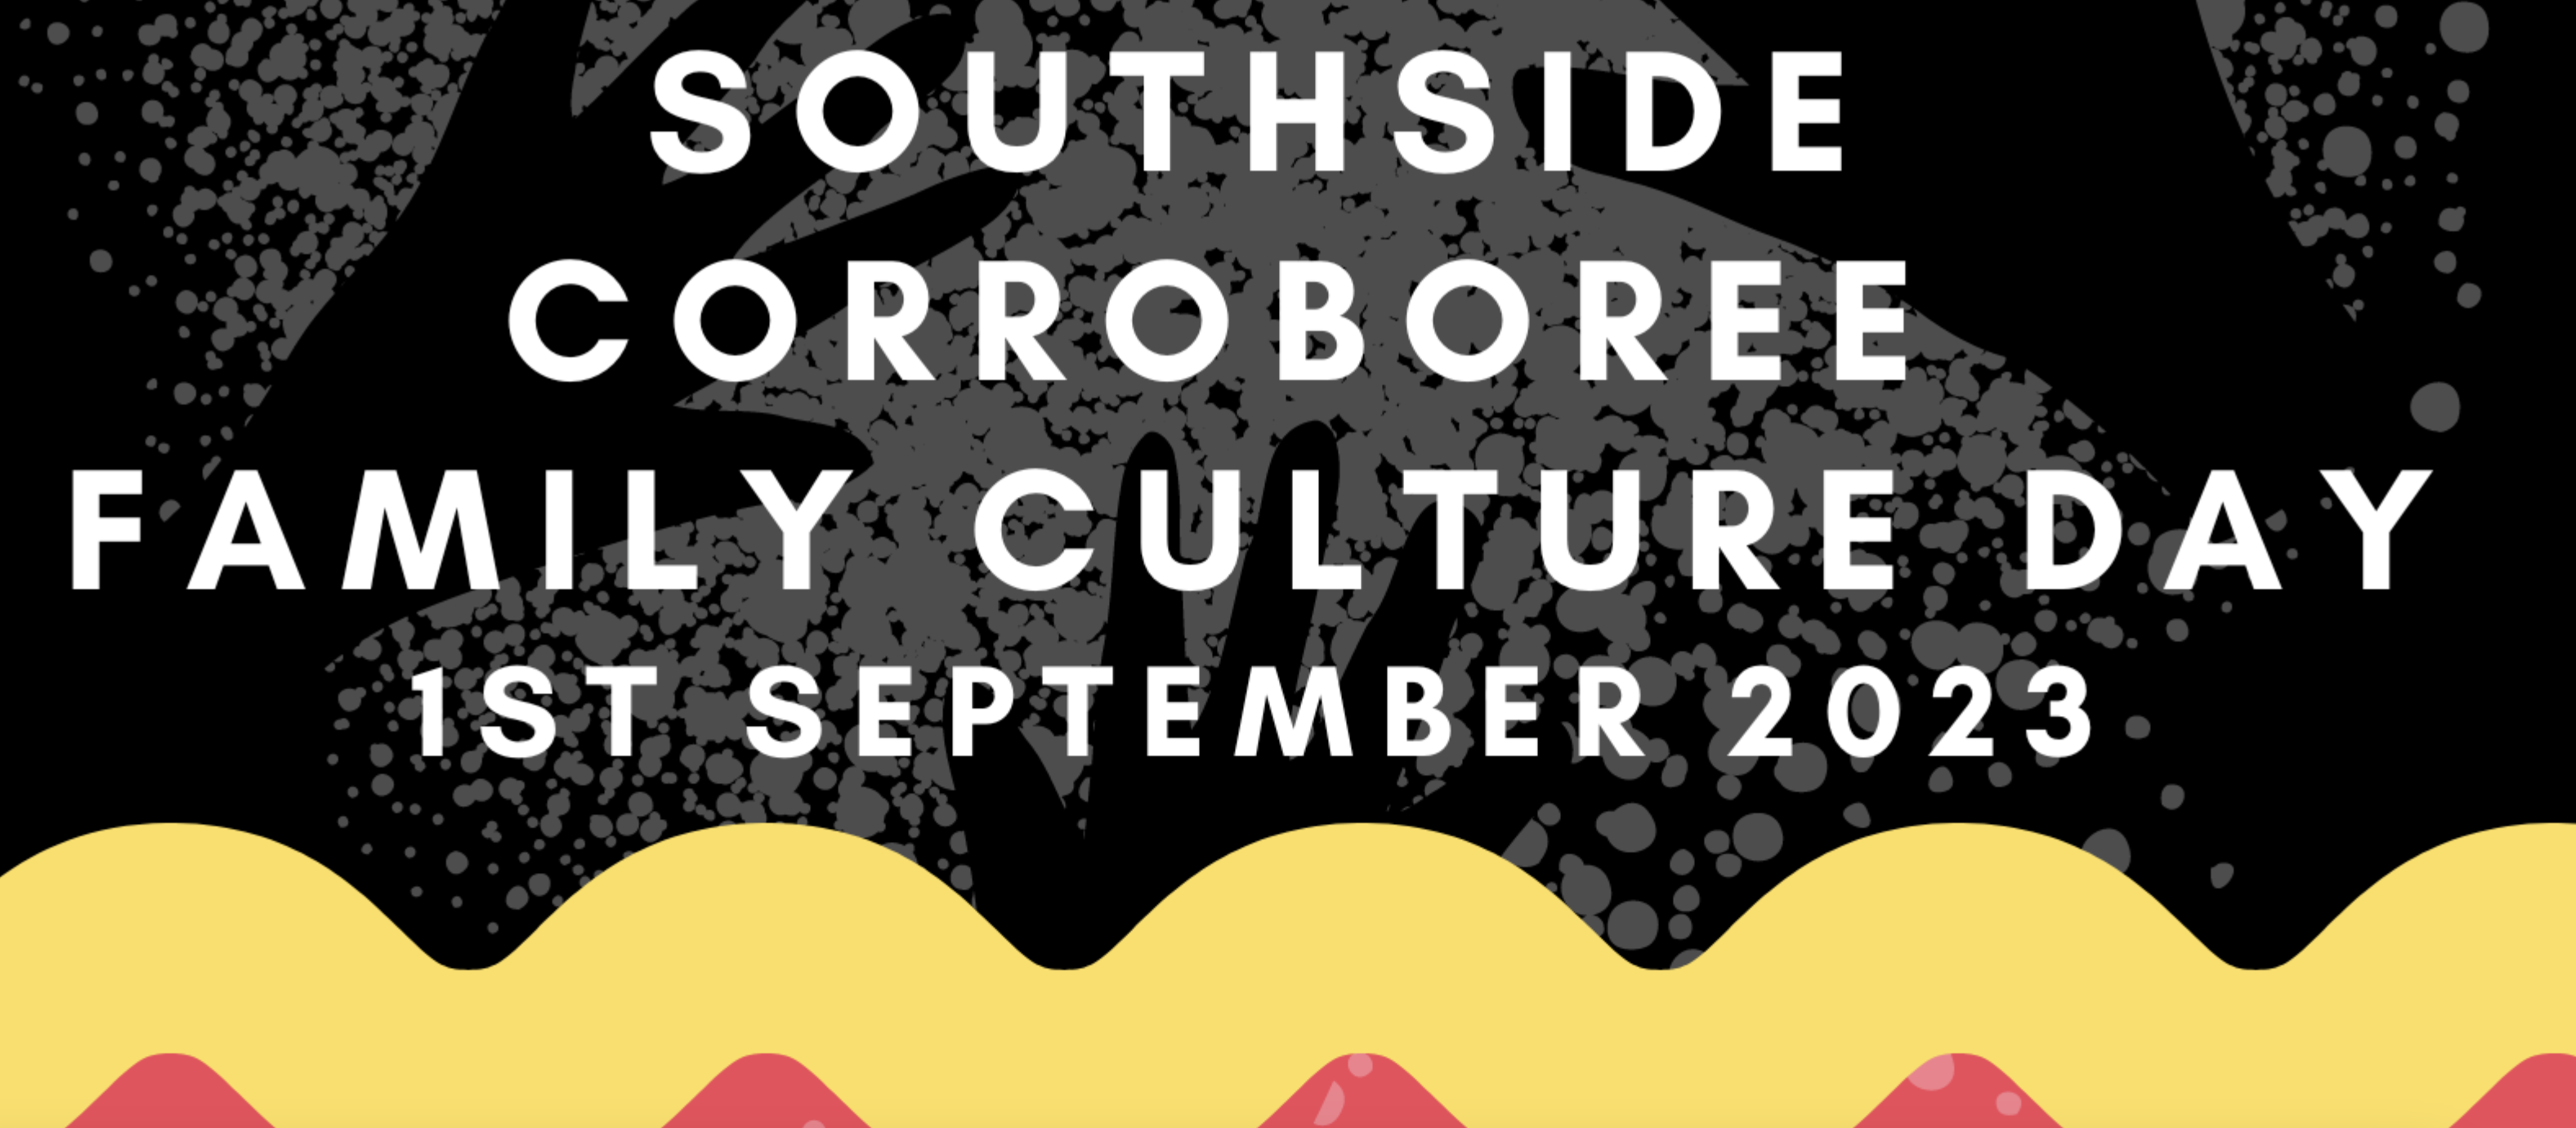 Southside Corroboree Family Culture Day